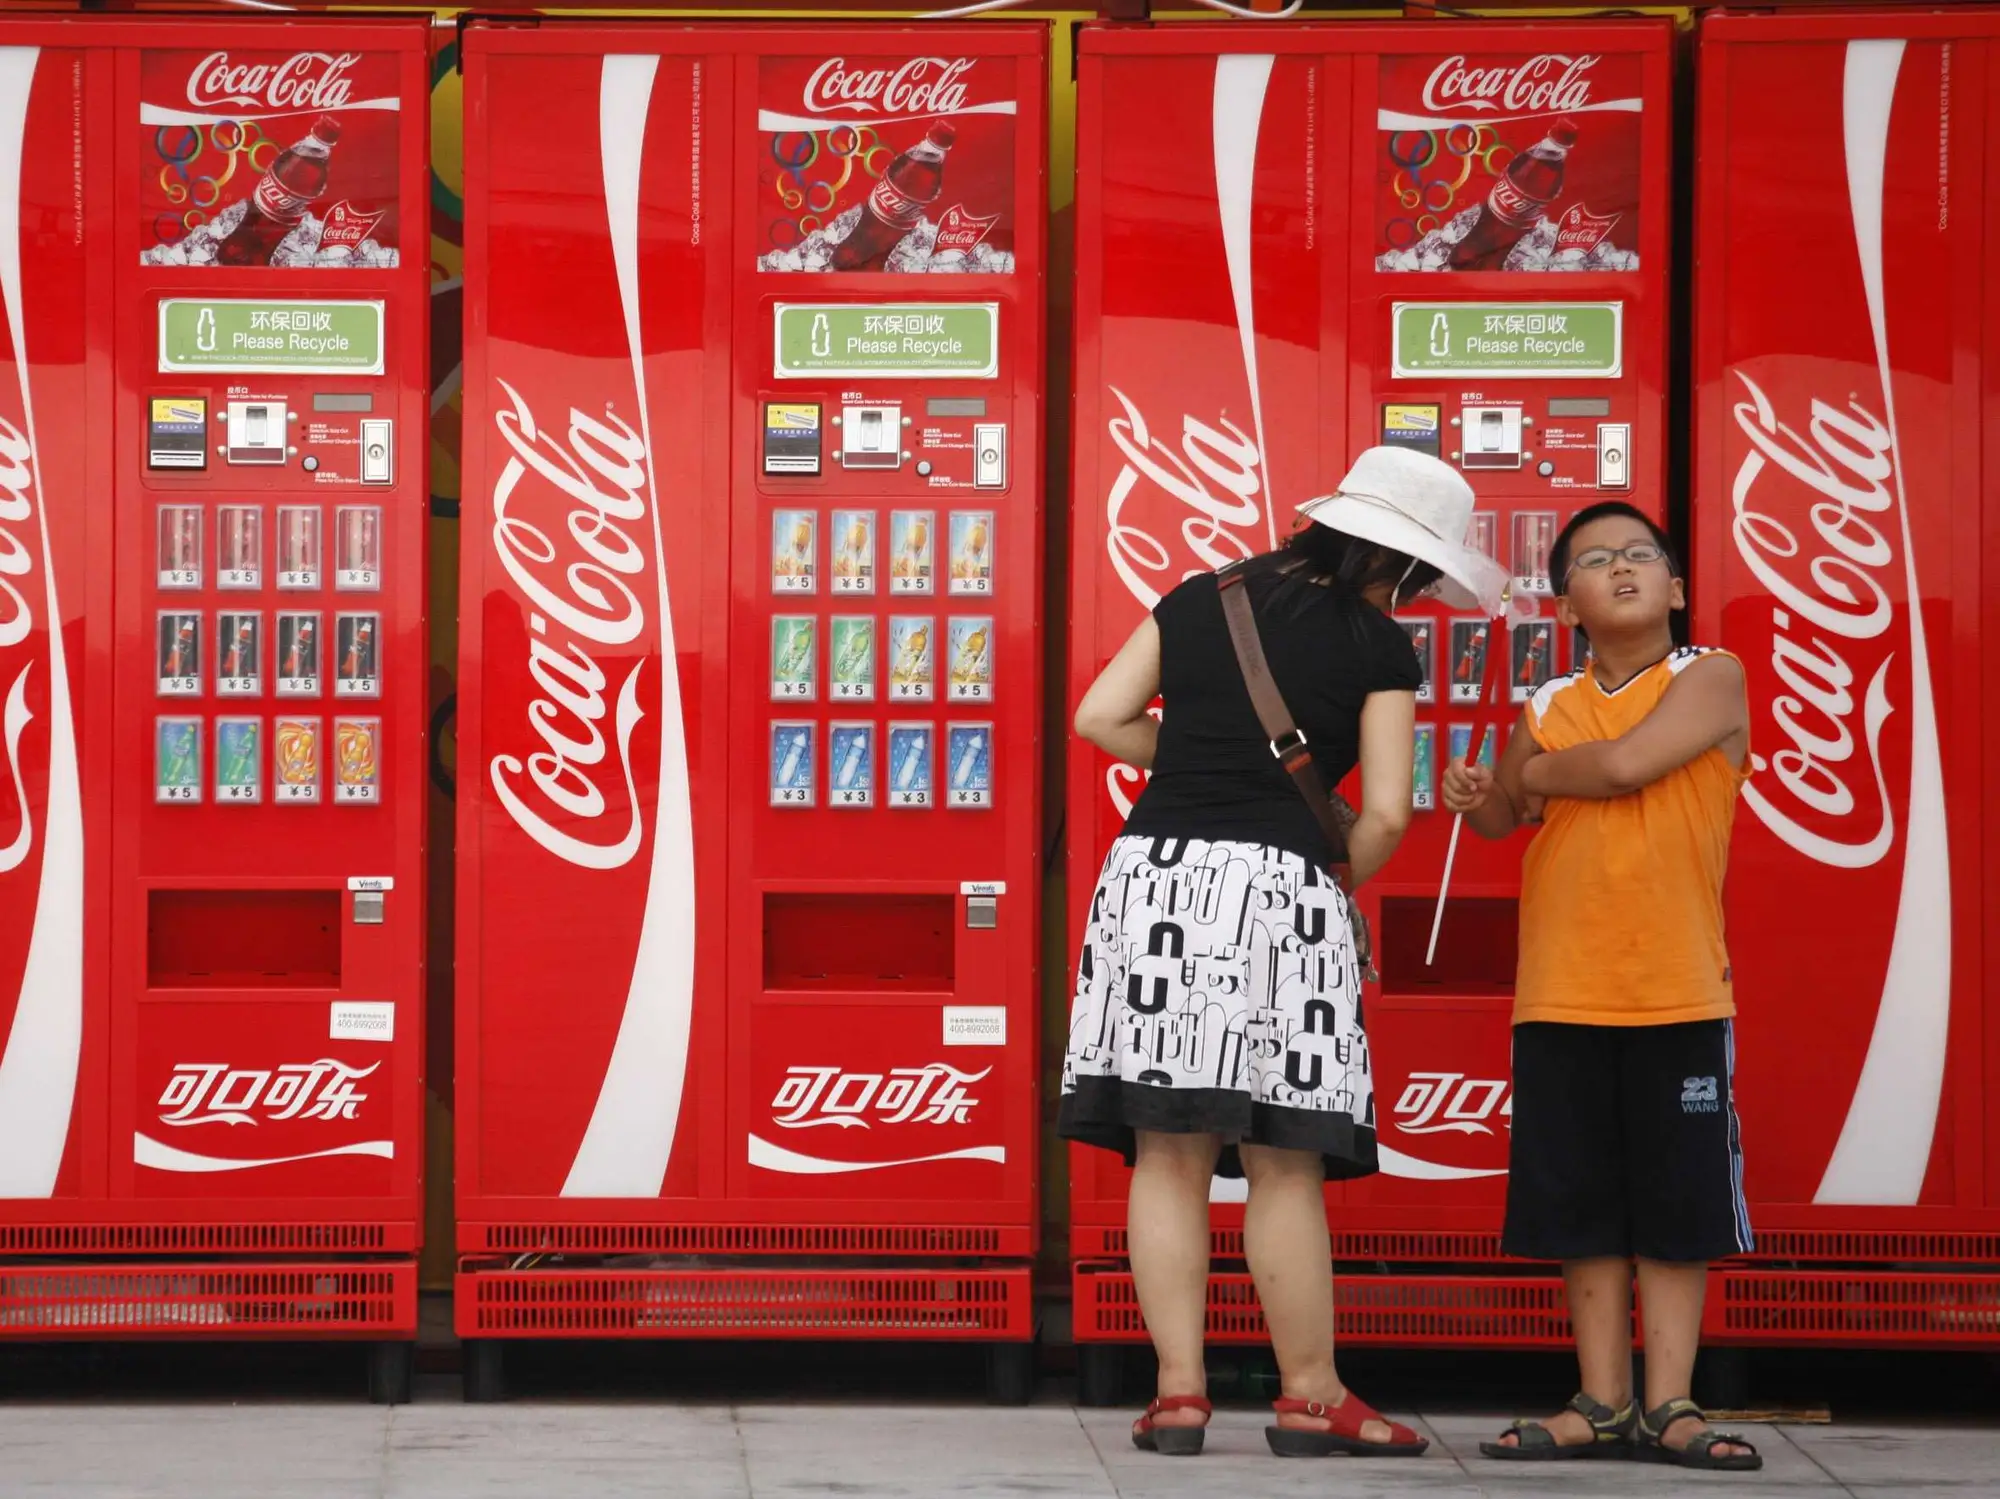 В Китае «Кока-Колу» продают как средство для прочистки труб